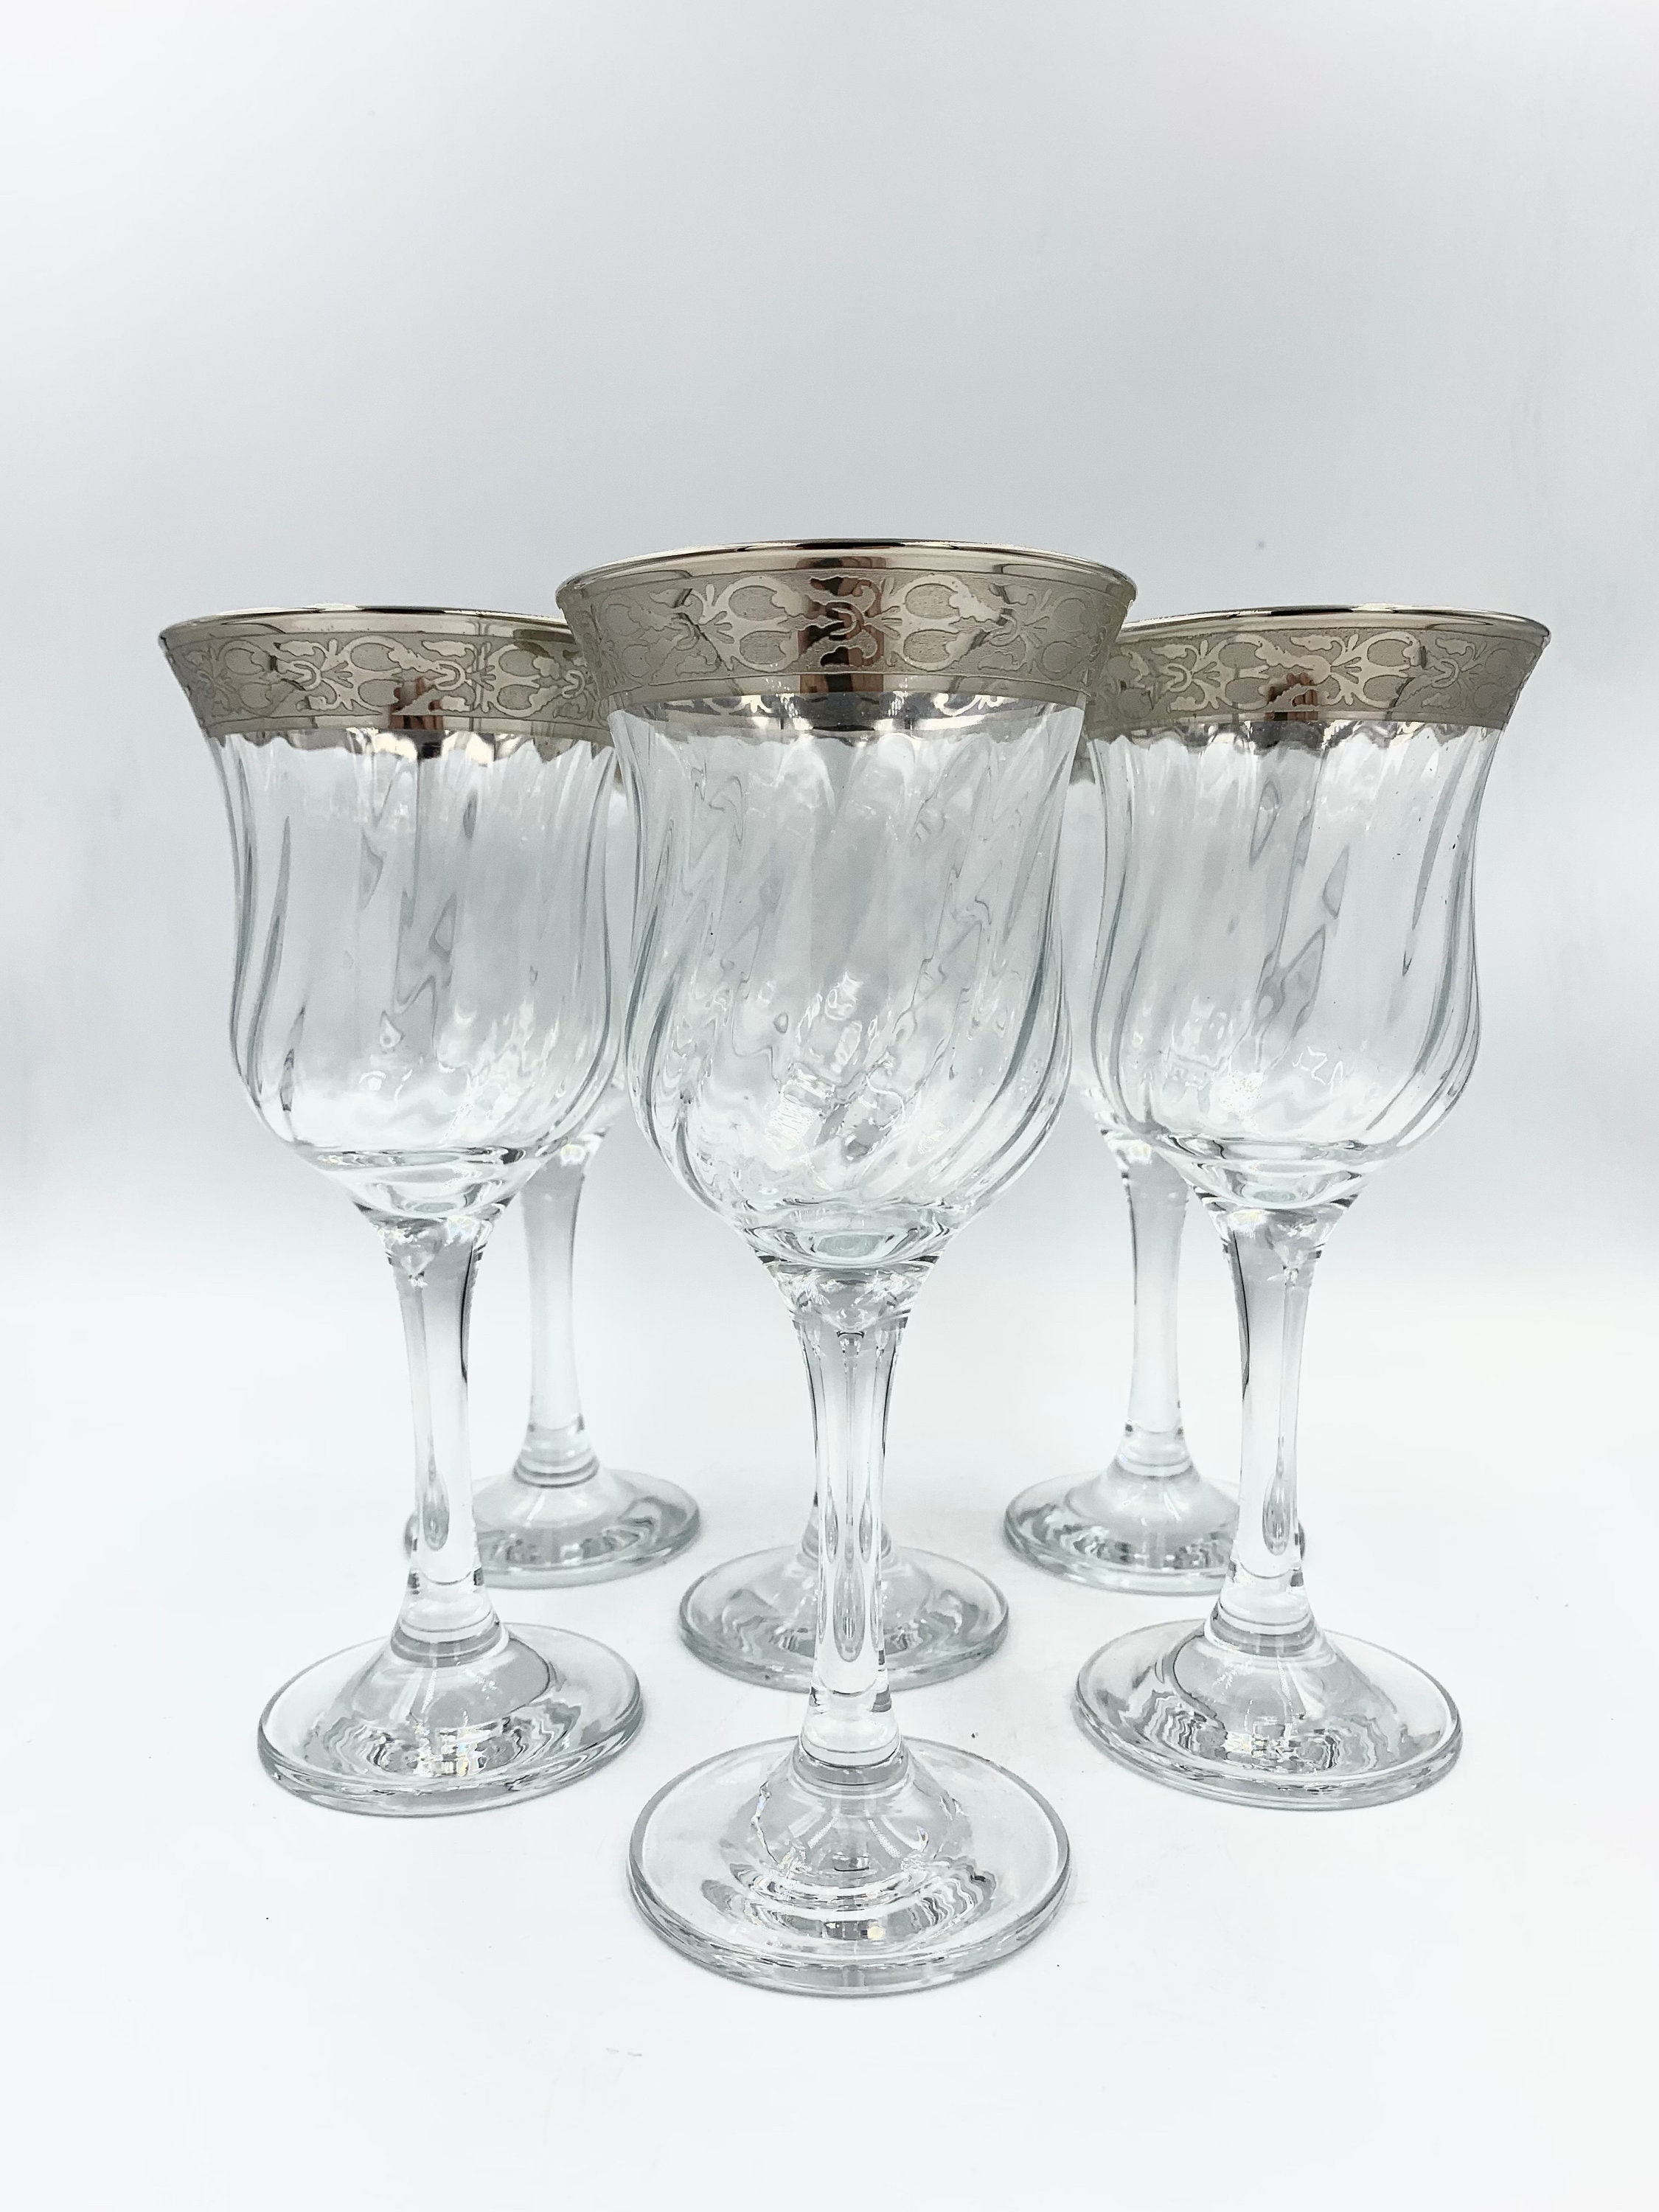 Classic Italian Wine Glass - Classic Italian Wine Glasses Water Iced Tea  Champagne Tumbler Classic Bistro Glasses Italy